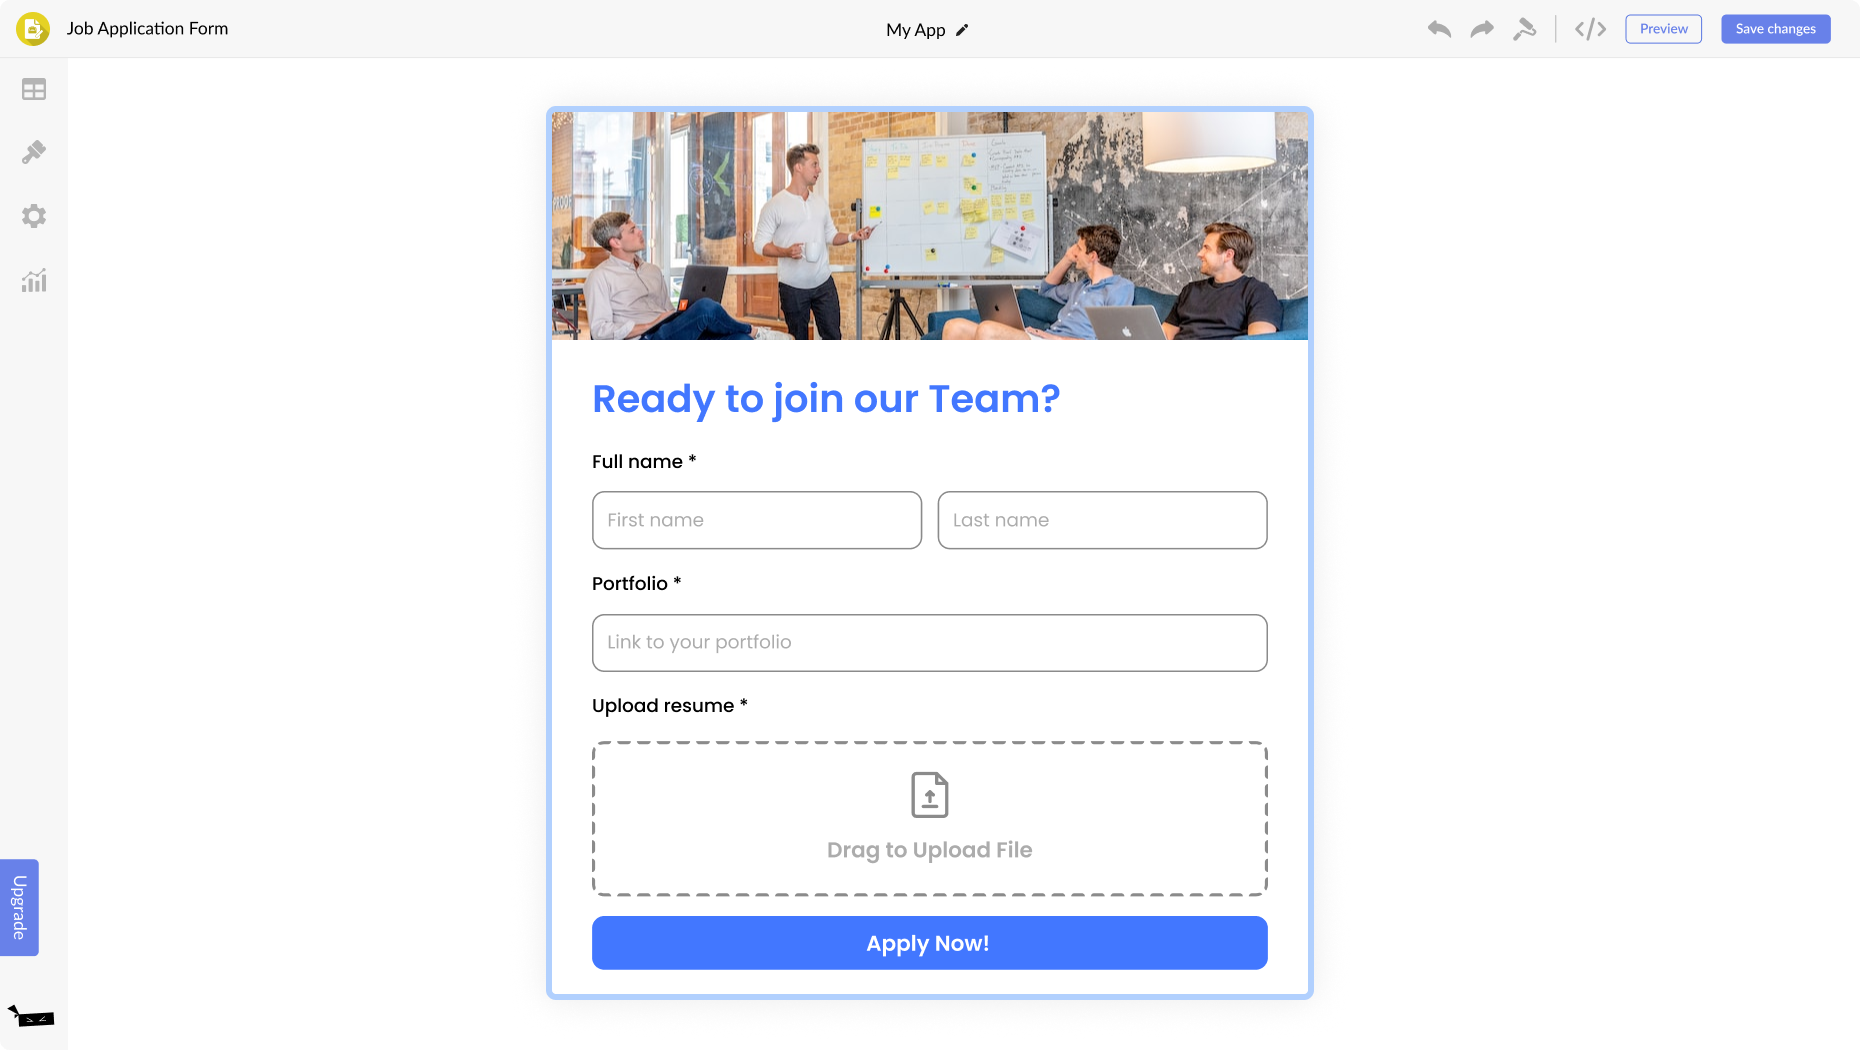 Job Application Form for Shift4Shop